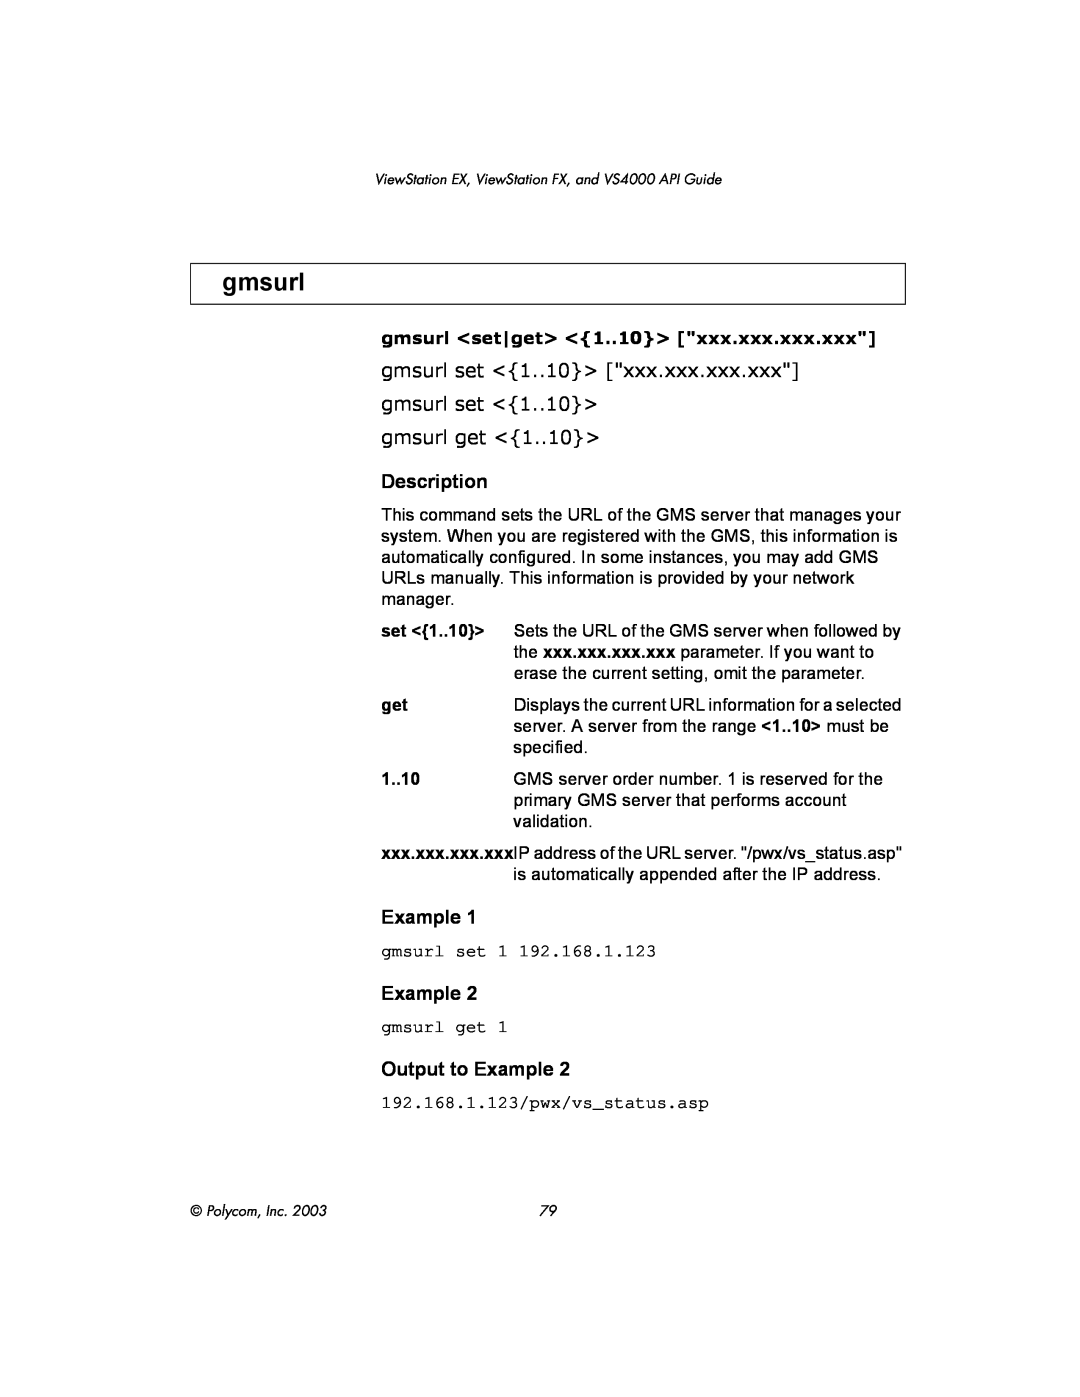 Polycom VIEWSTATION EX manual gmsurl get <1..10>, Description, Output to Example, gmsurl <set|get> <1..10> 